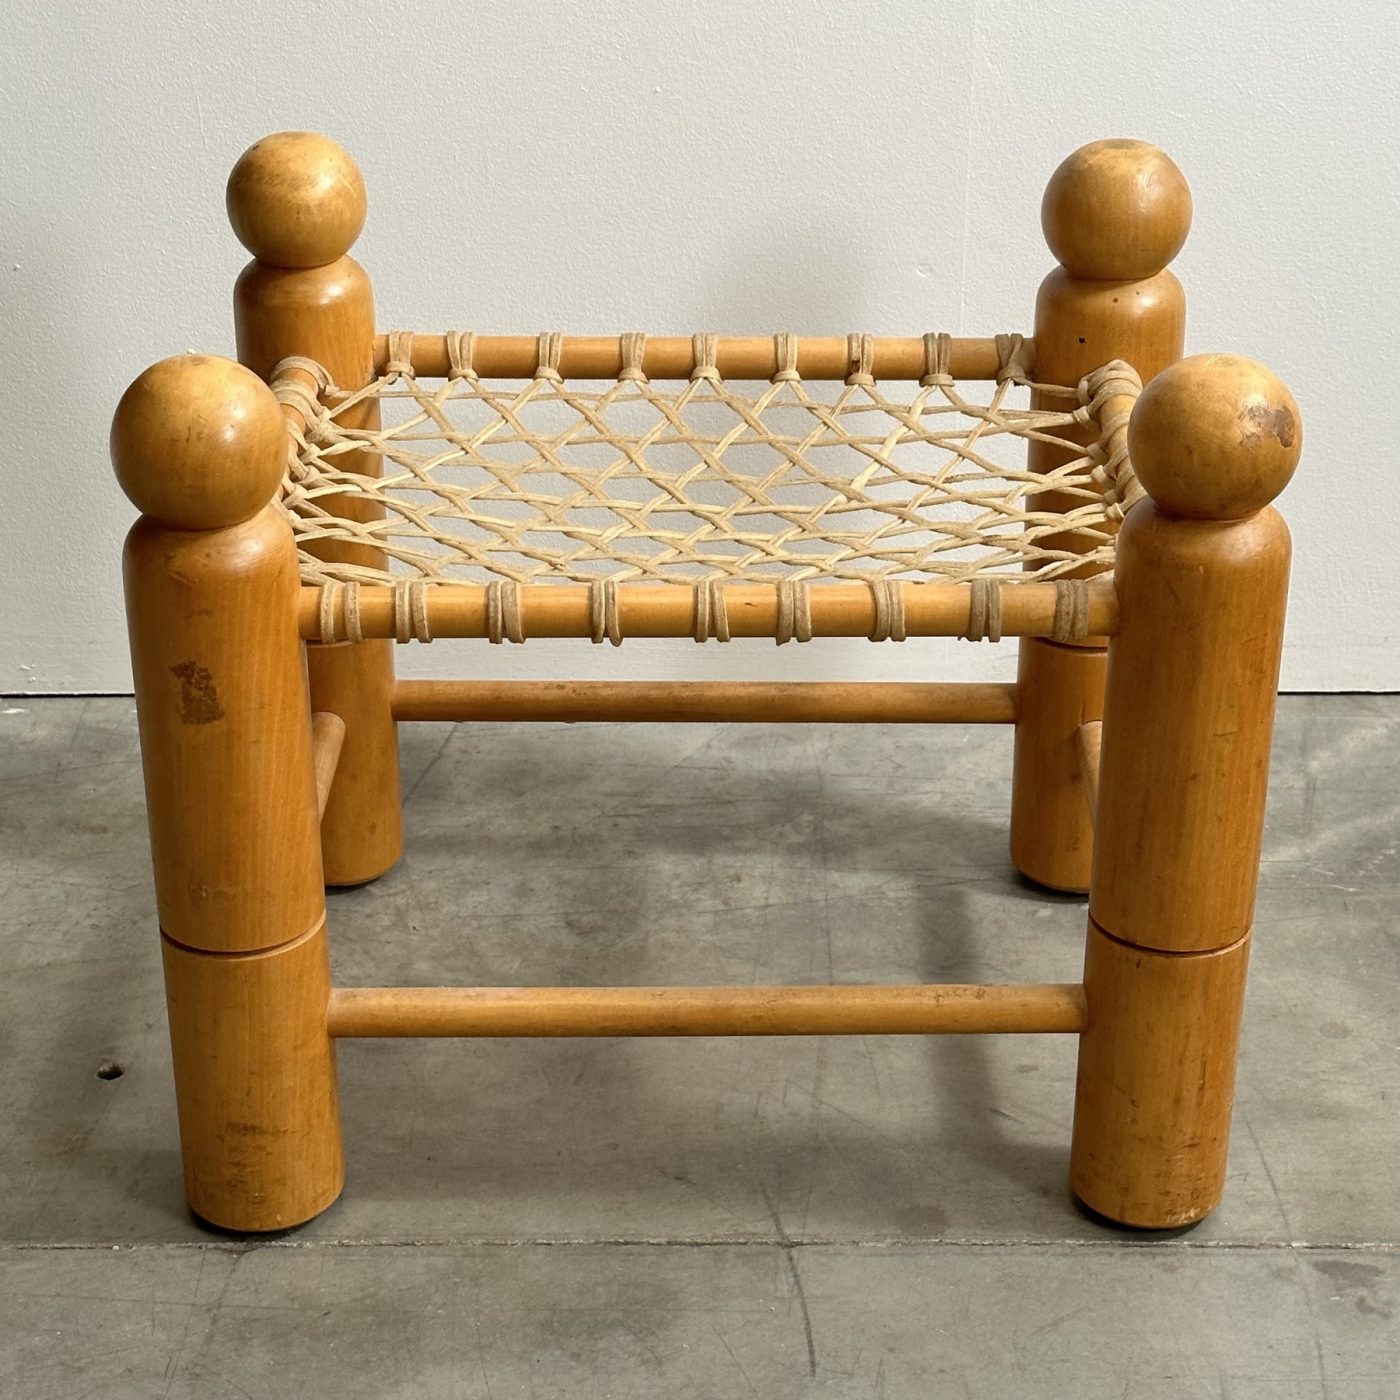 objet-vagabond-stool0003